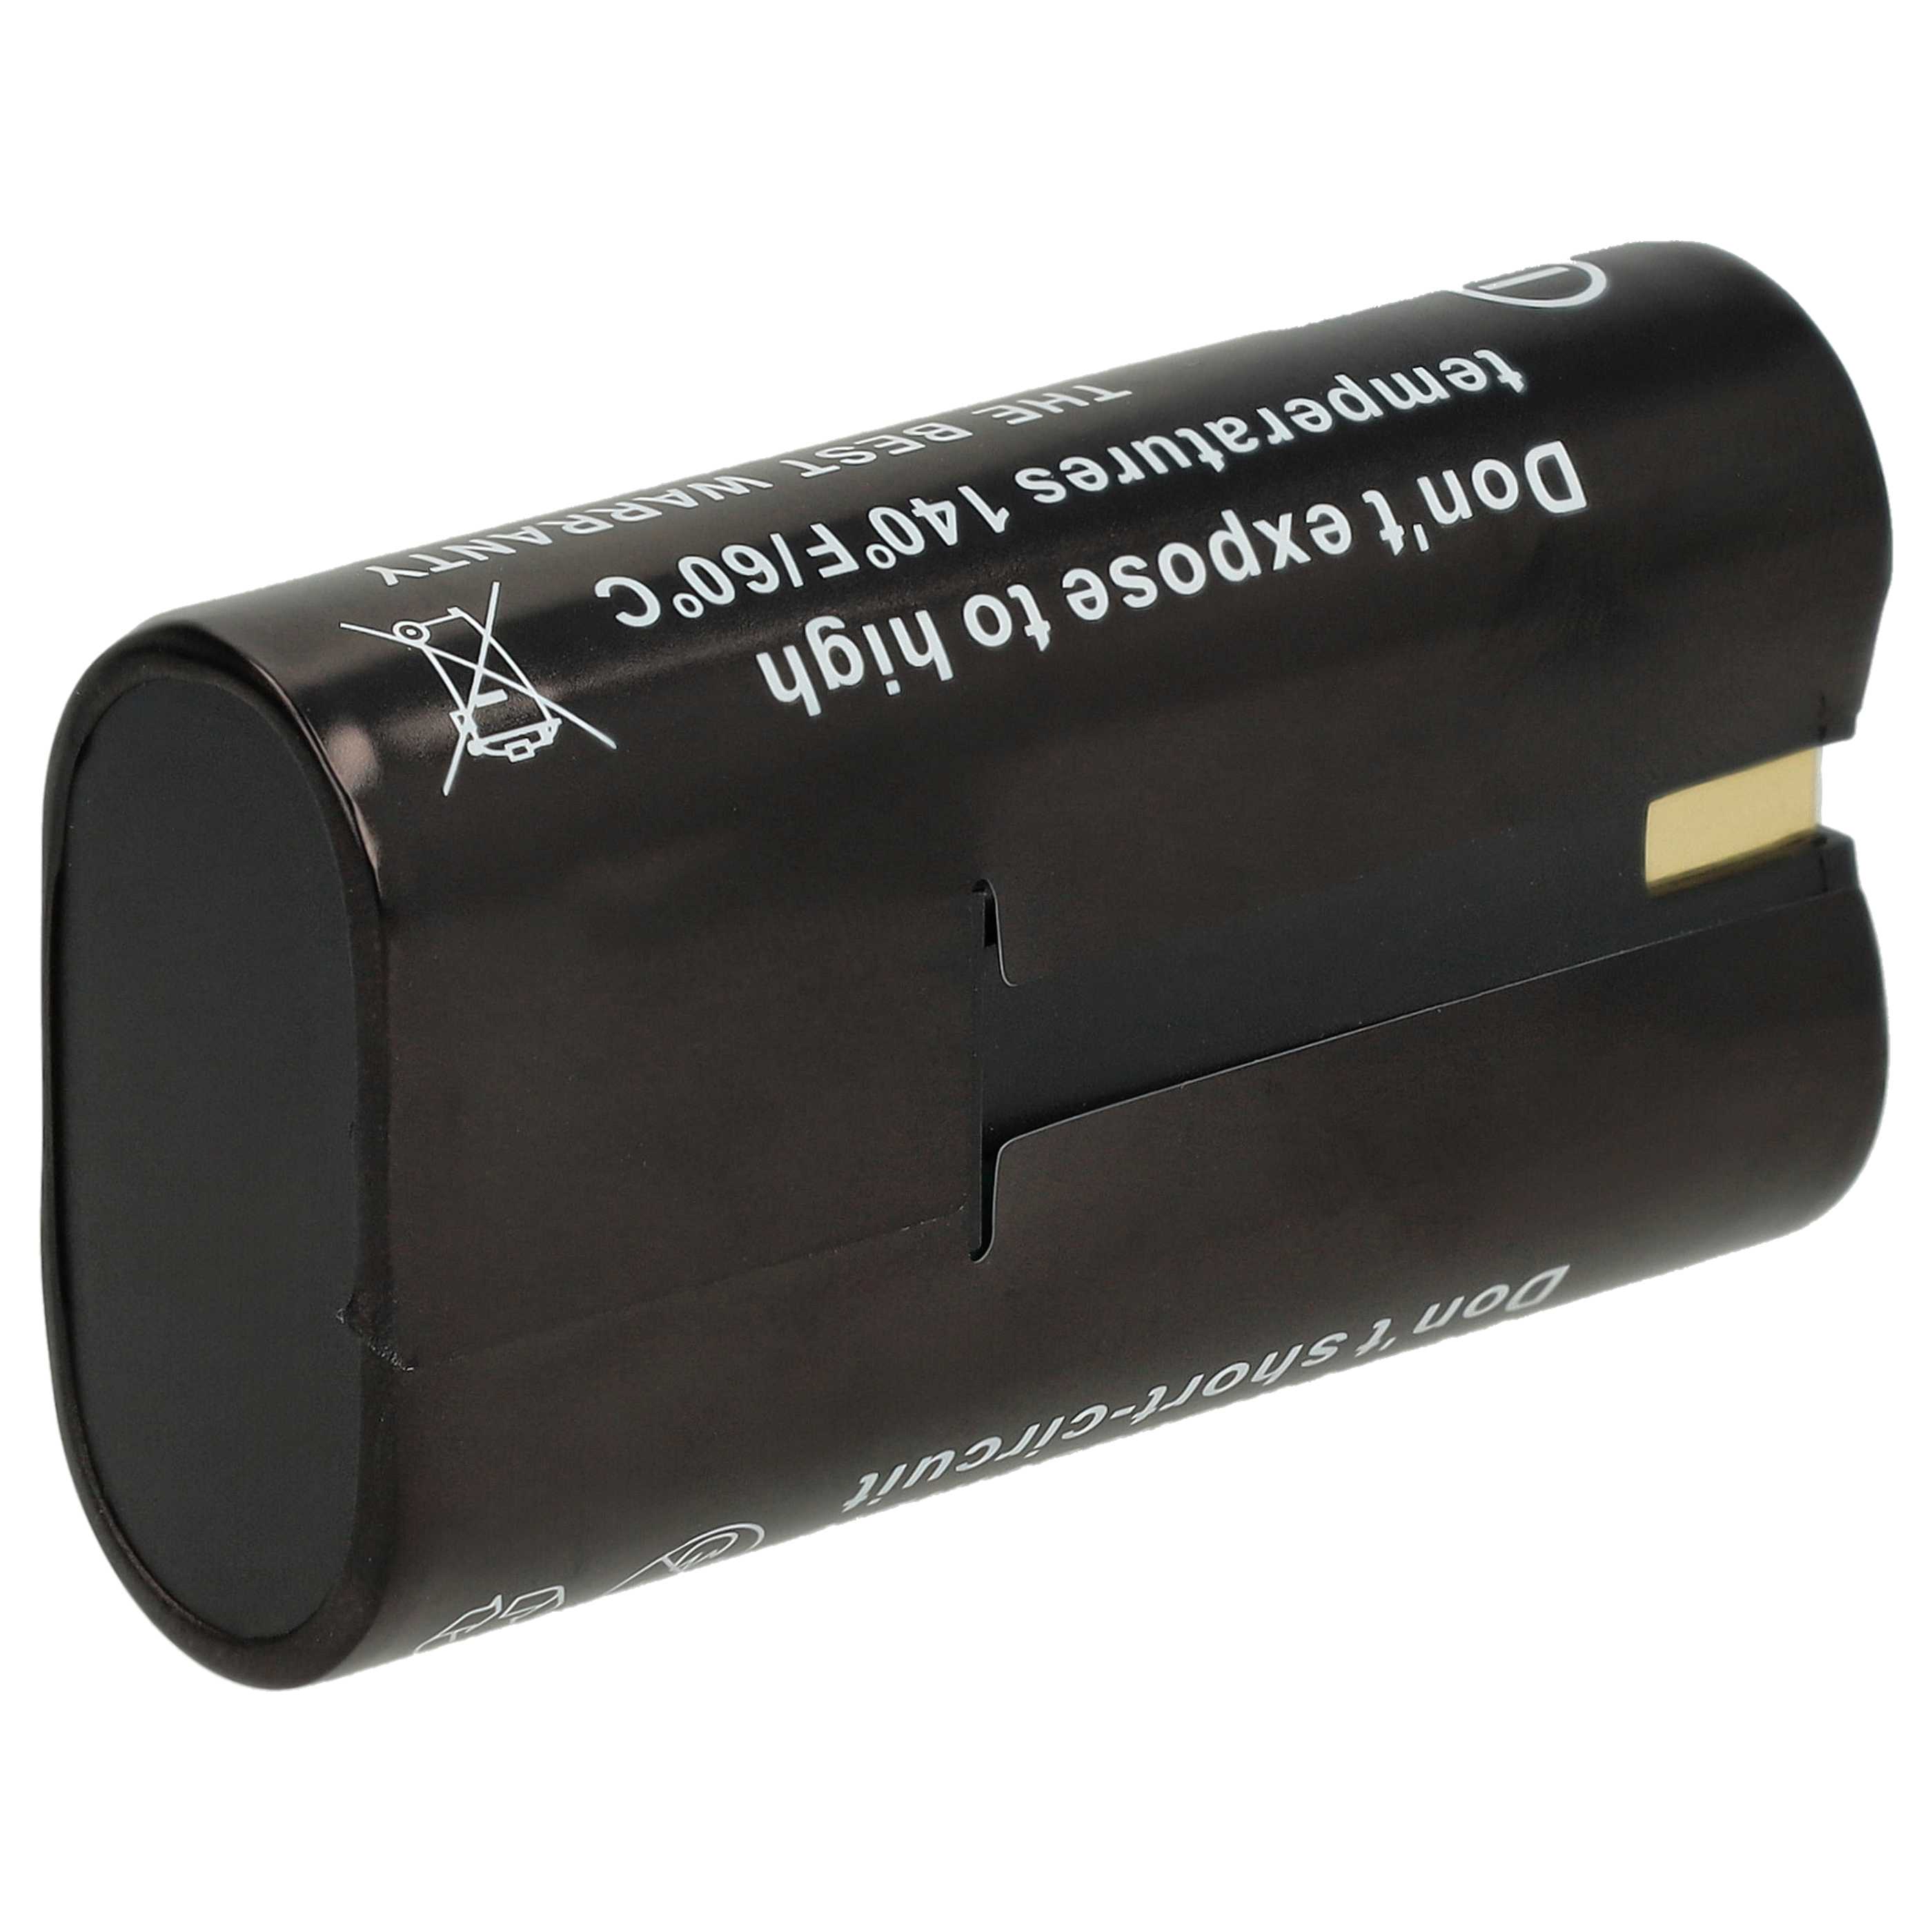 Akumulator do aparatu cyfrowego zamiennik Kodak Klic-8000, RB50 - 1520 mAh 3,6 V Li-Ion